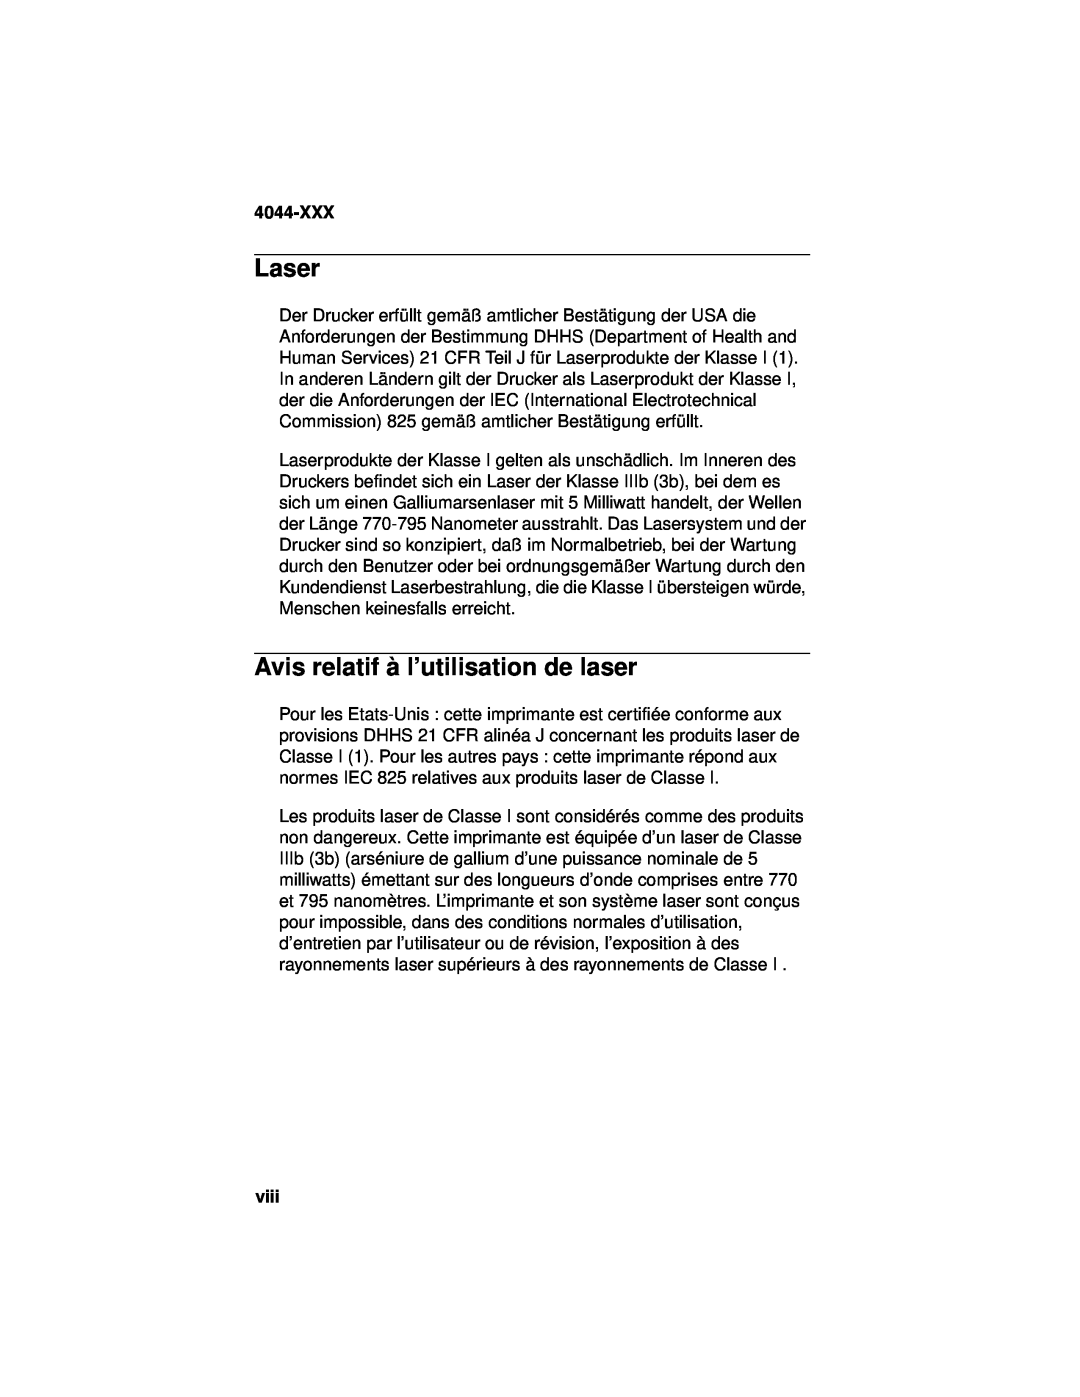 Lexmark 4044-XXX, E310 manual Laser, Avis relatif à l’utilisation de laser, viii 